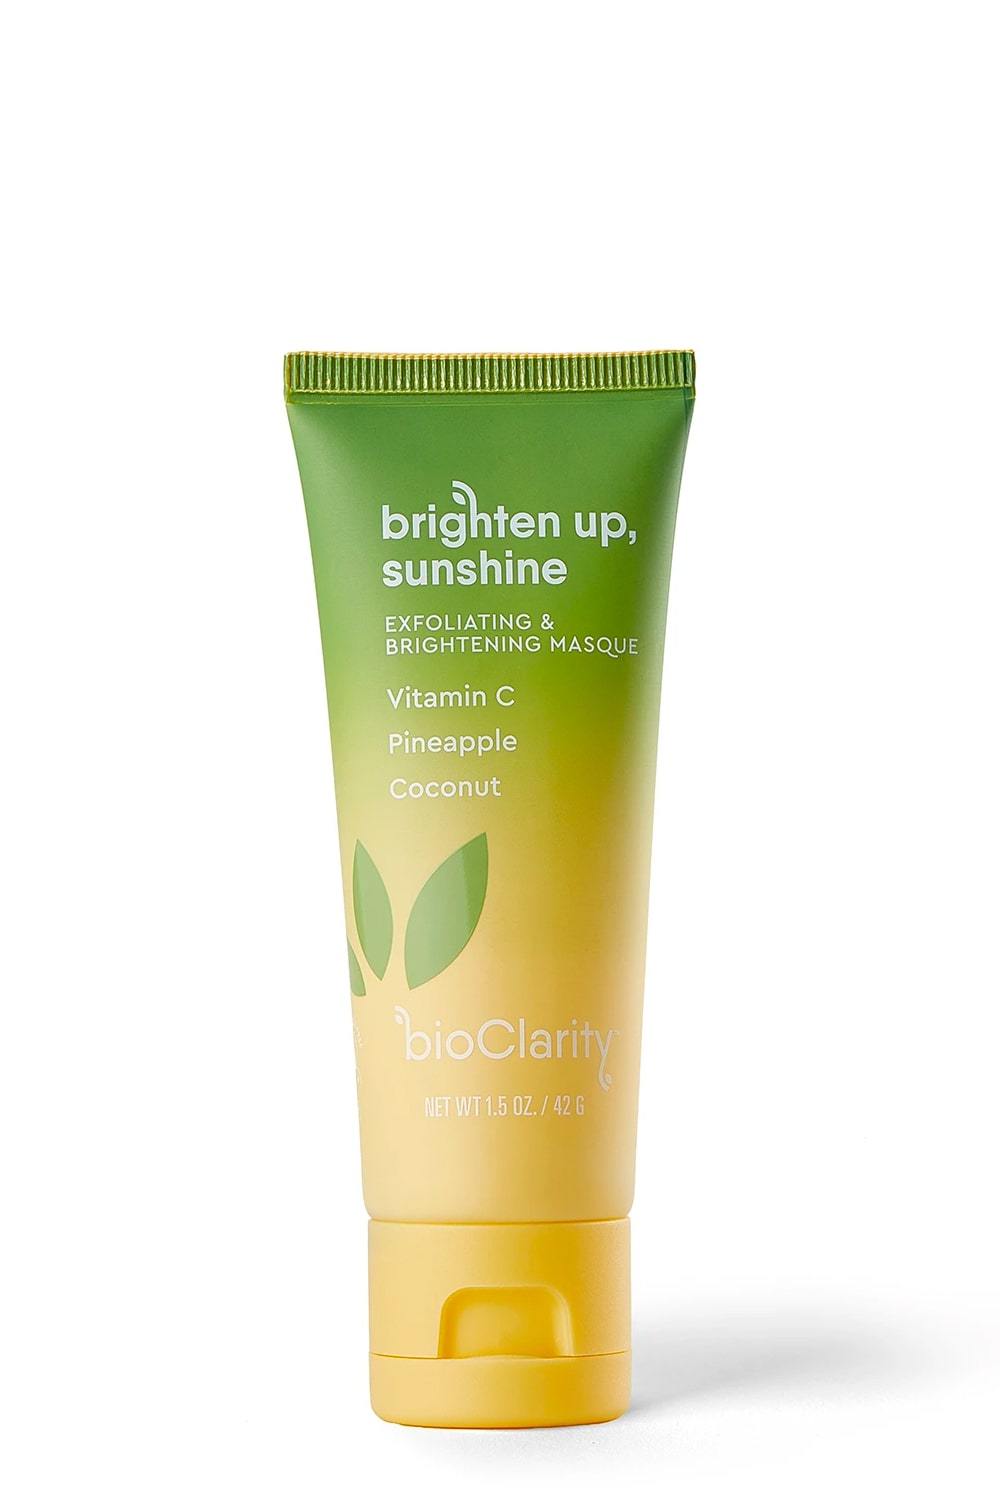 Shapermint bioClarity 25% Off - Brightening Masque Brighten Up, Sunshine by bioClarity